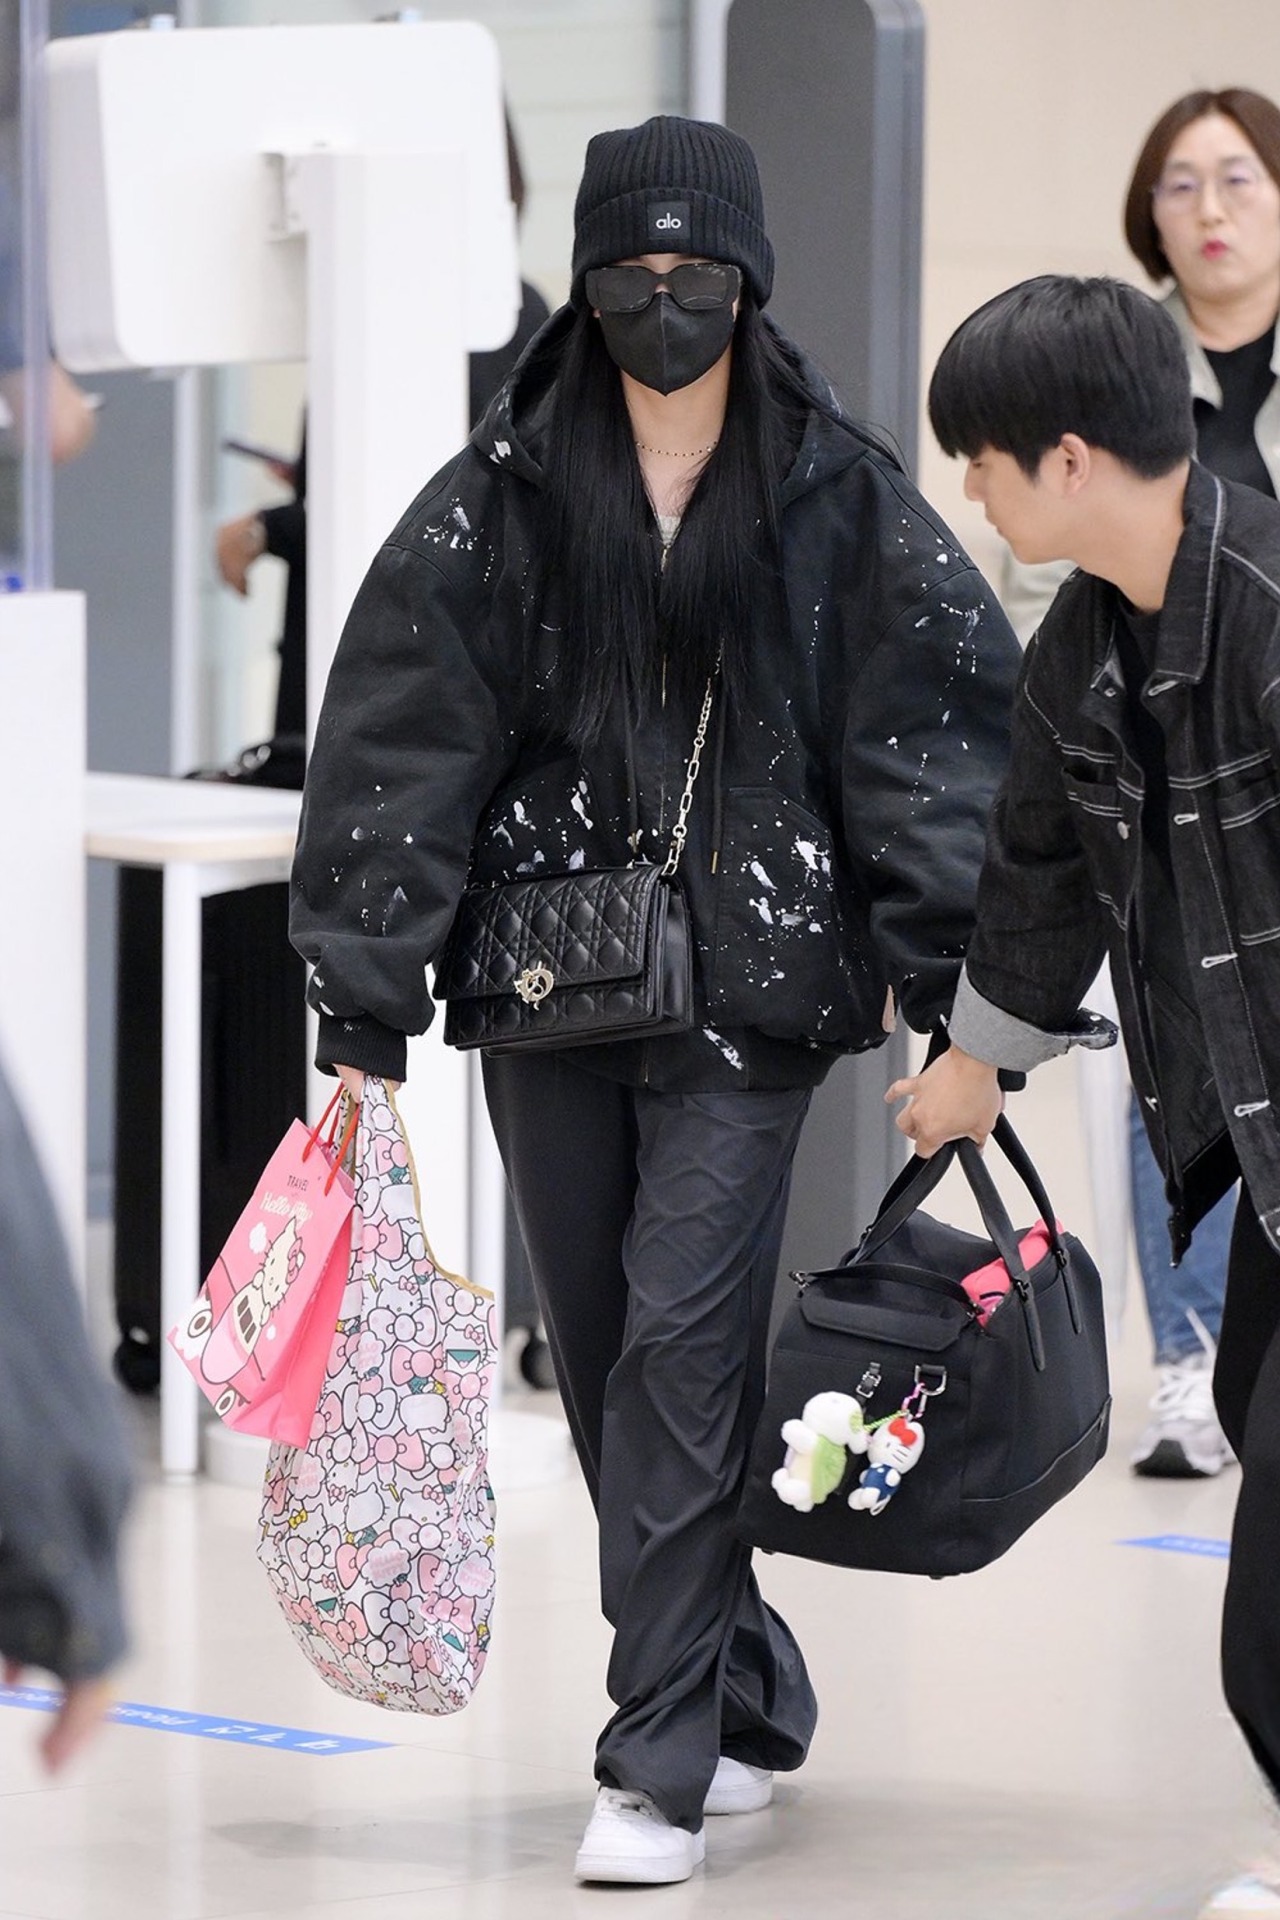 Jisoo Blackpink - LV Handbag Fashion